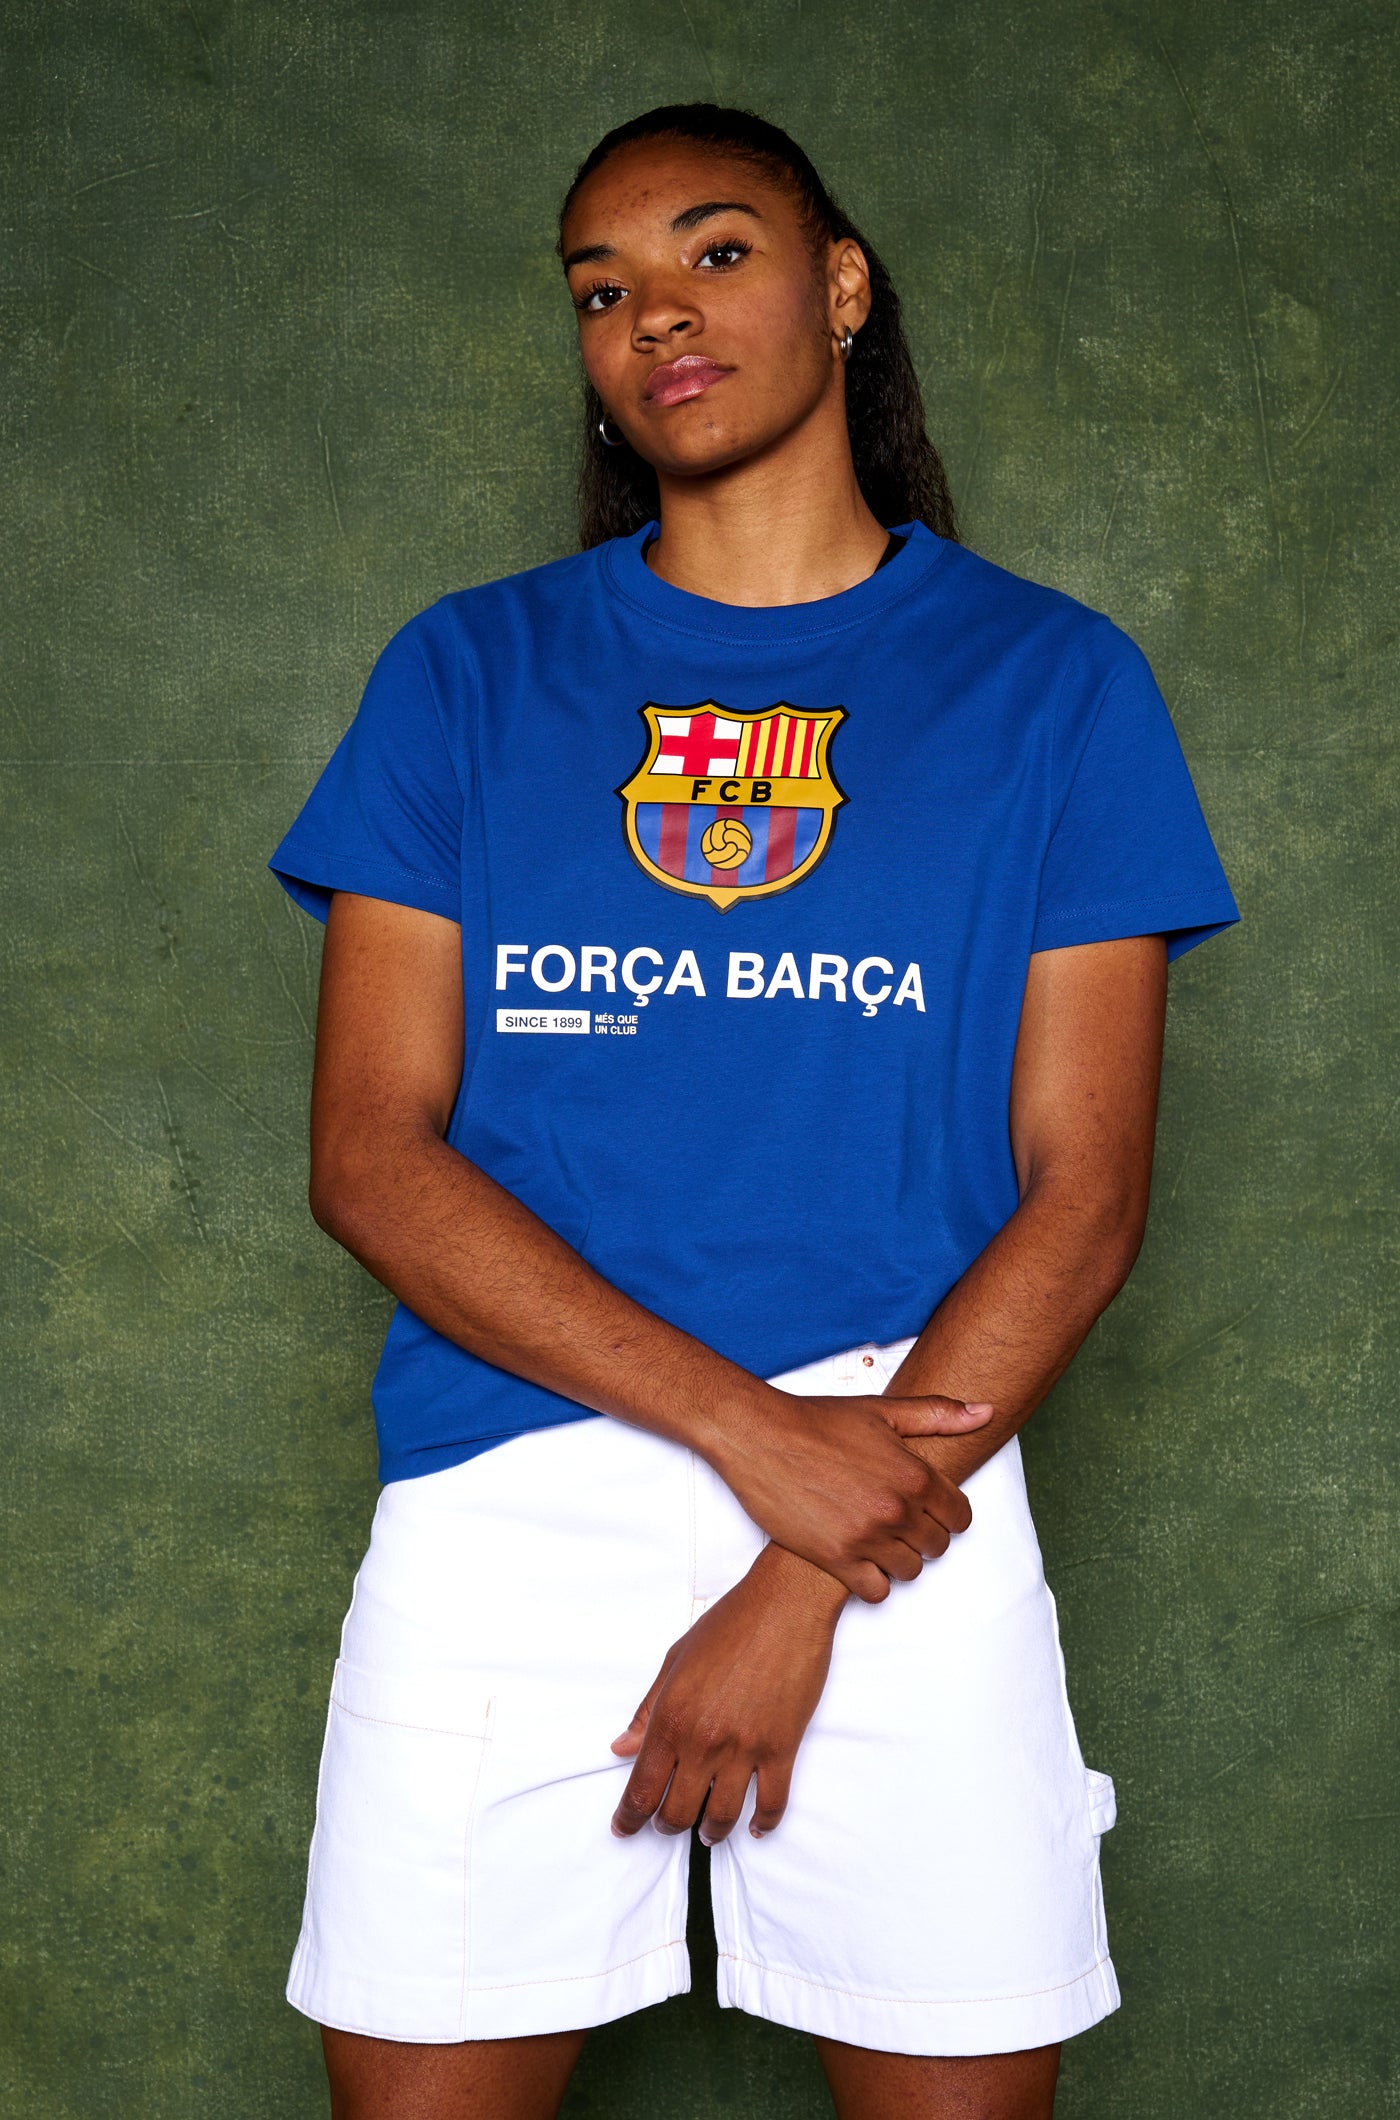 Força blau Barça-T-Shirt